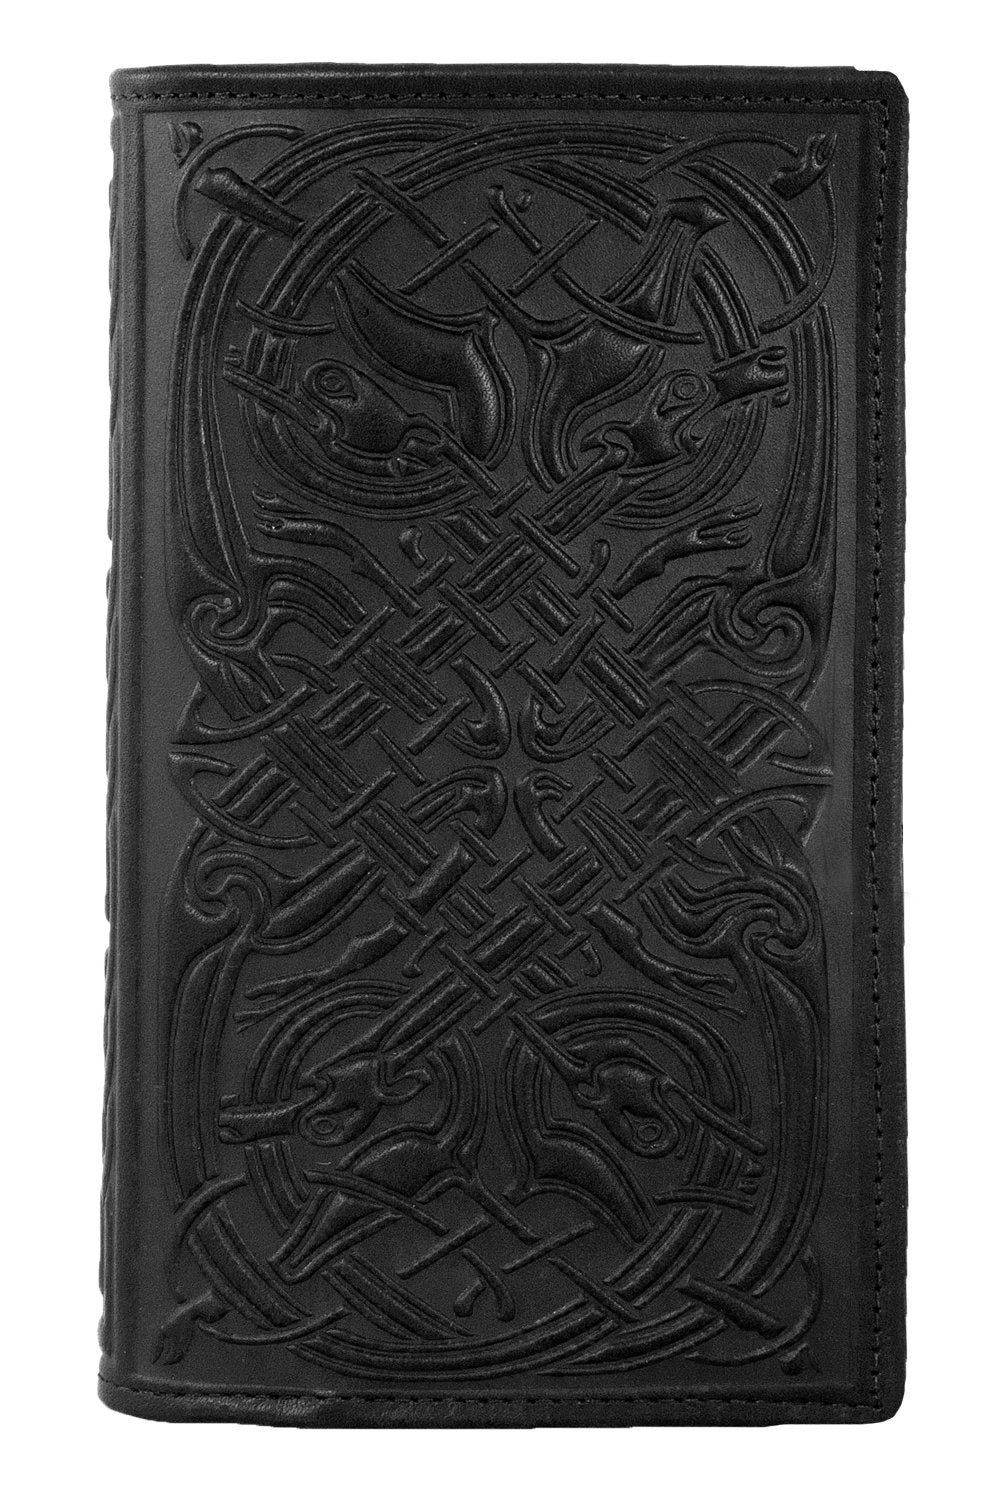 Large Leather Smartphone Wallet - Celtic Hounds